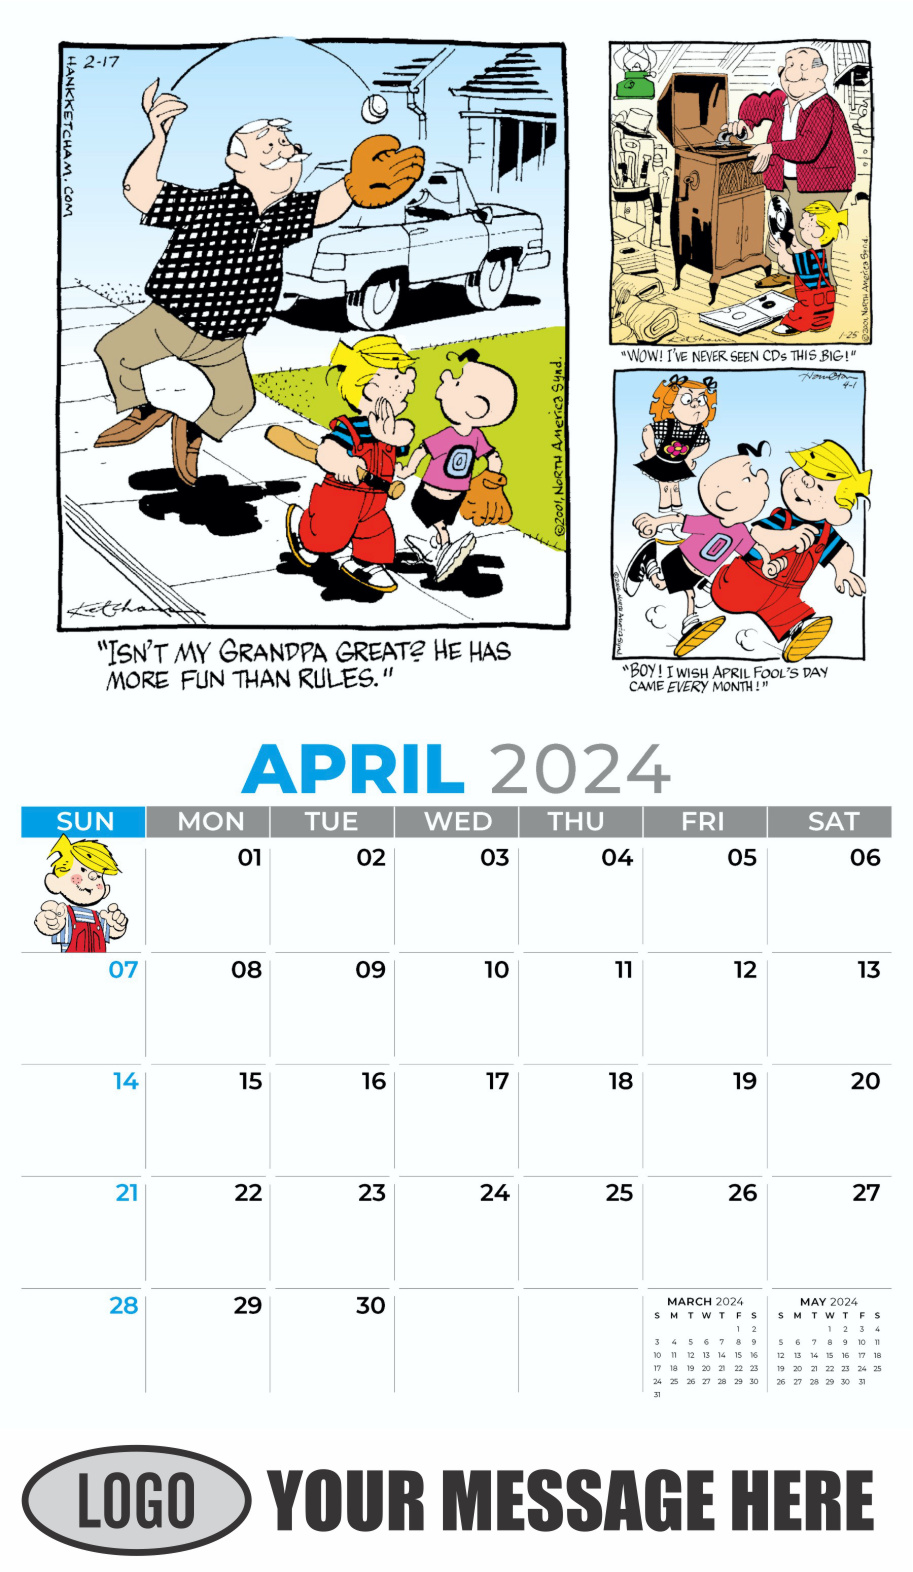 Dennis the Menace 2024 Business Promotional Wall Calendar - April